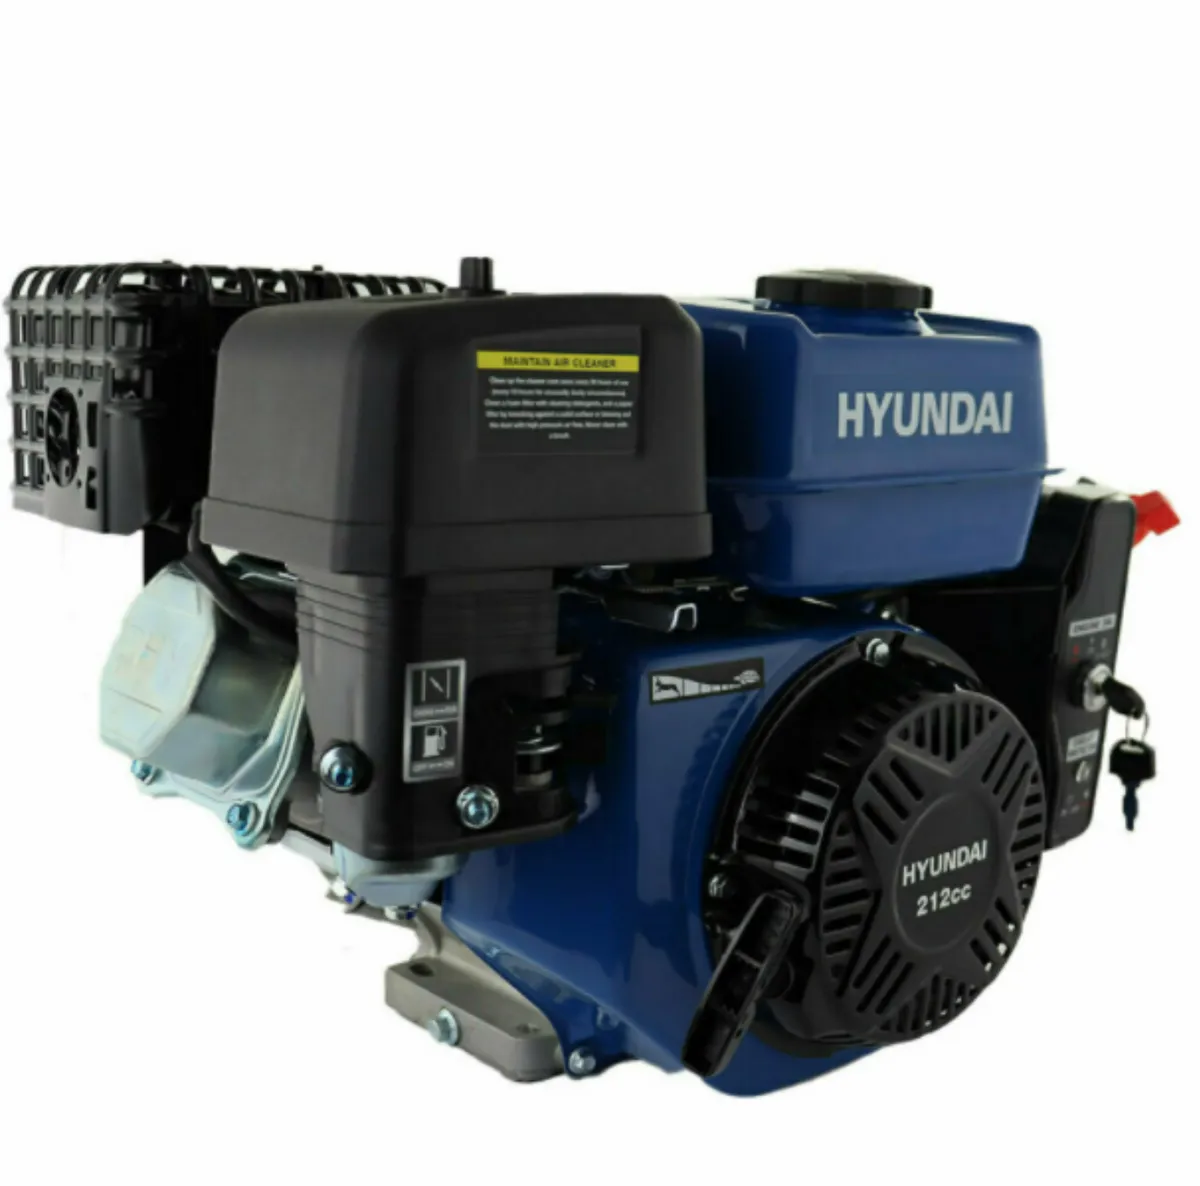 Hyundai 212cc 7hp Petrol Engine (4-Stroke)